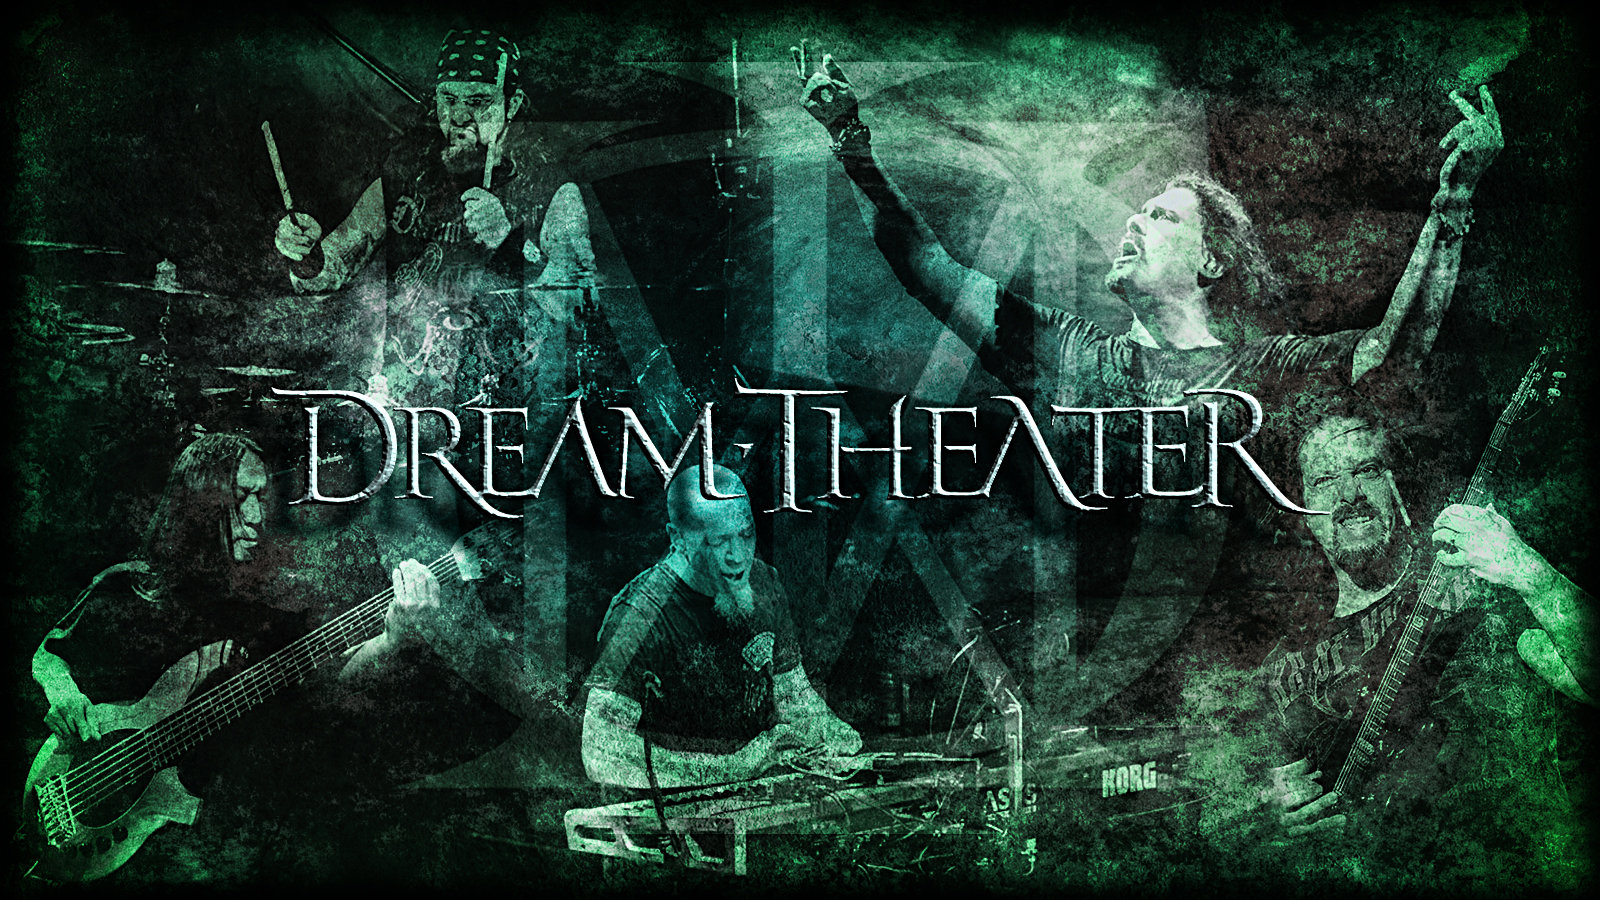 Free Download Dream Theater Wallpaper ID401227 Hd 1600x900 For Desktop